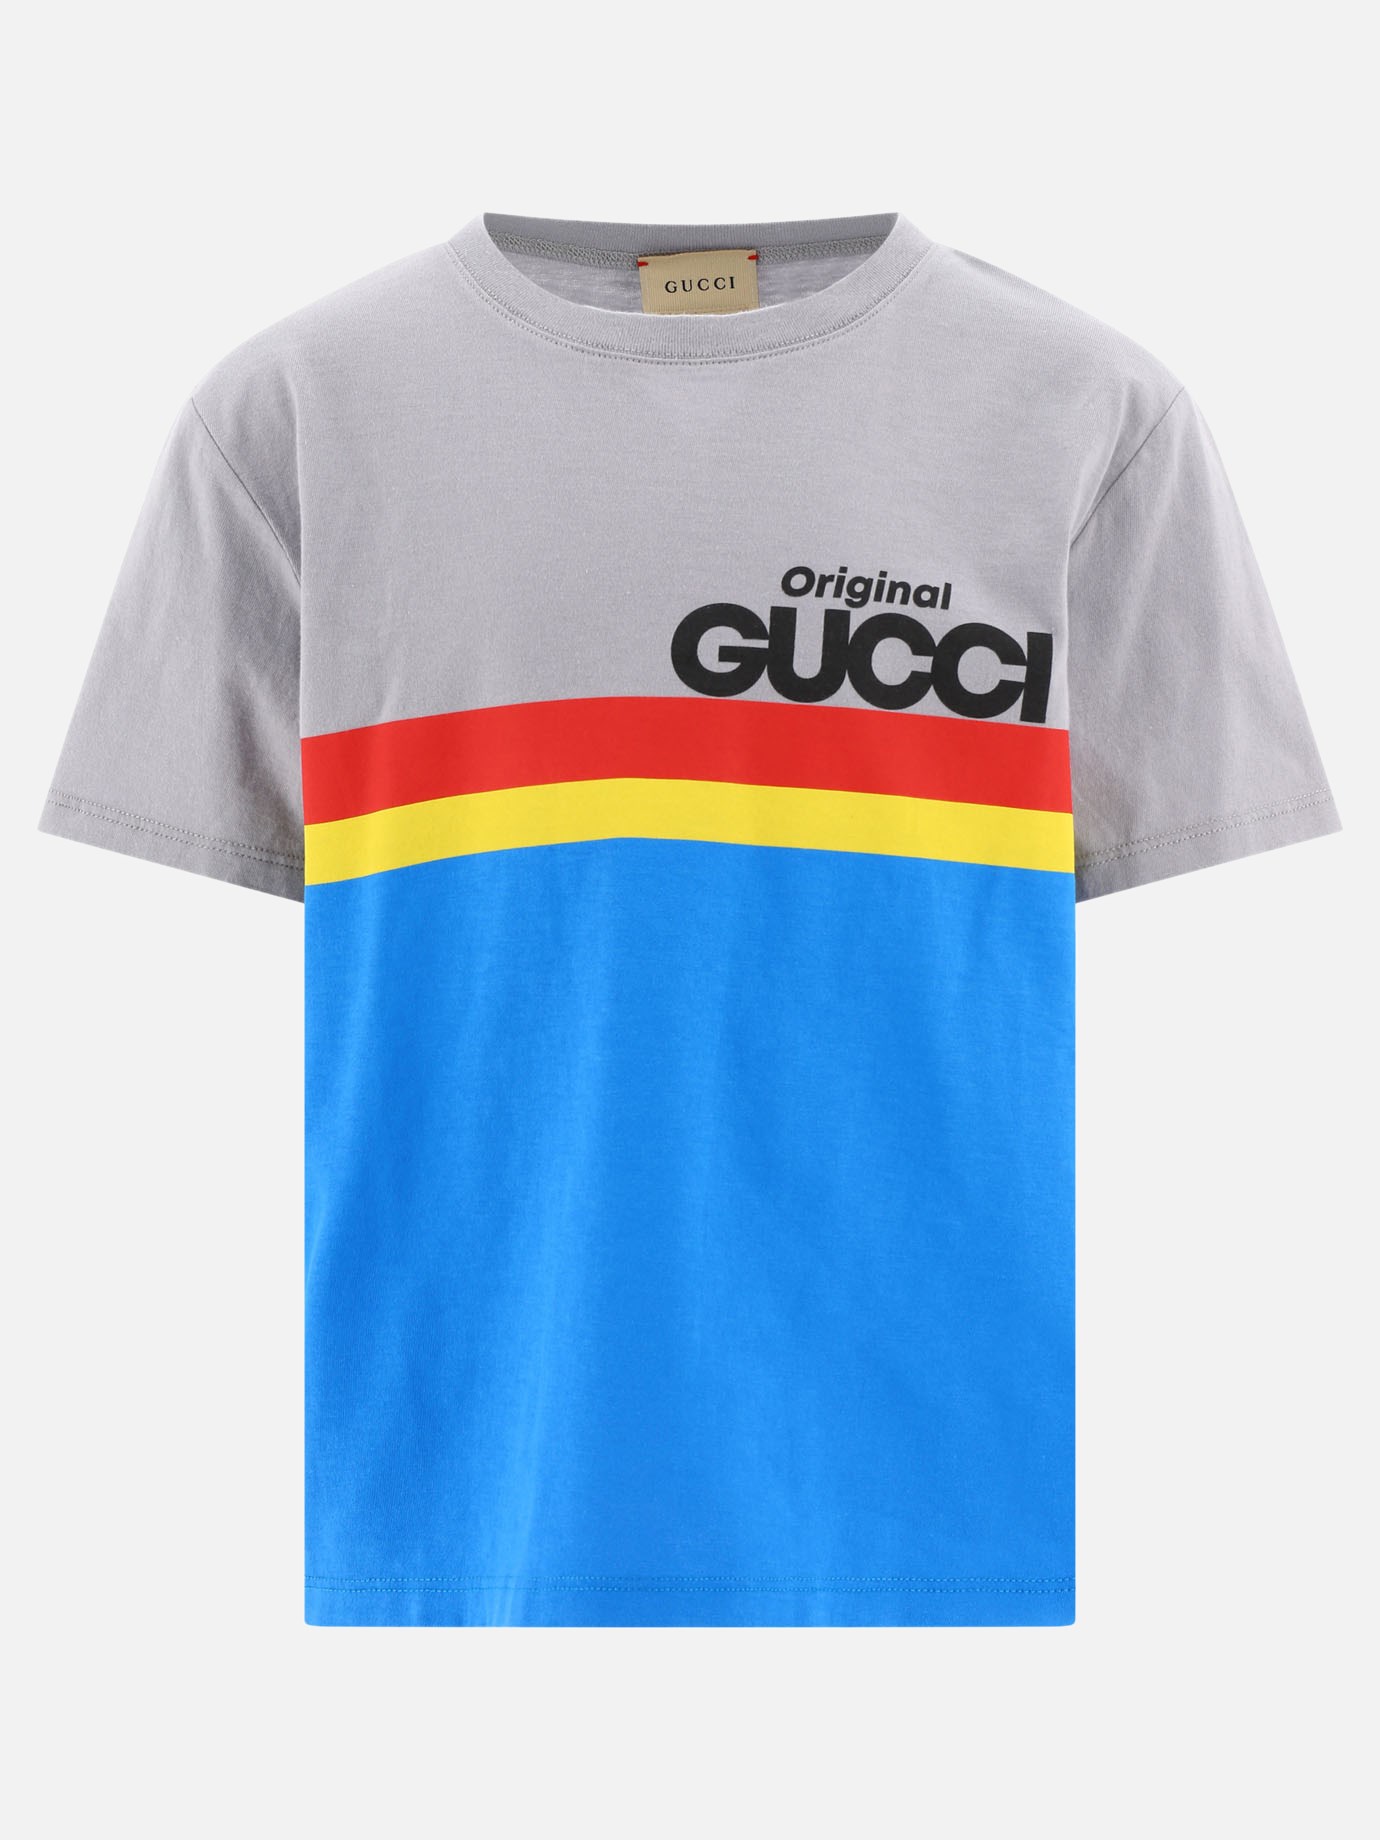  Original Gucci  t-shirtby Gucci Kids - 1